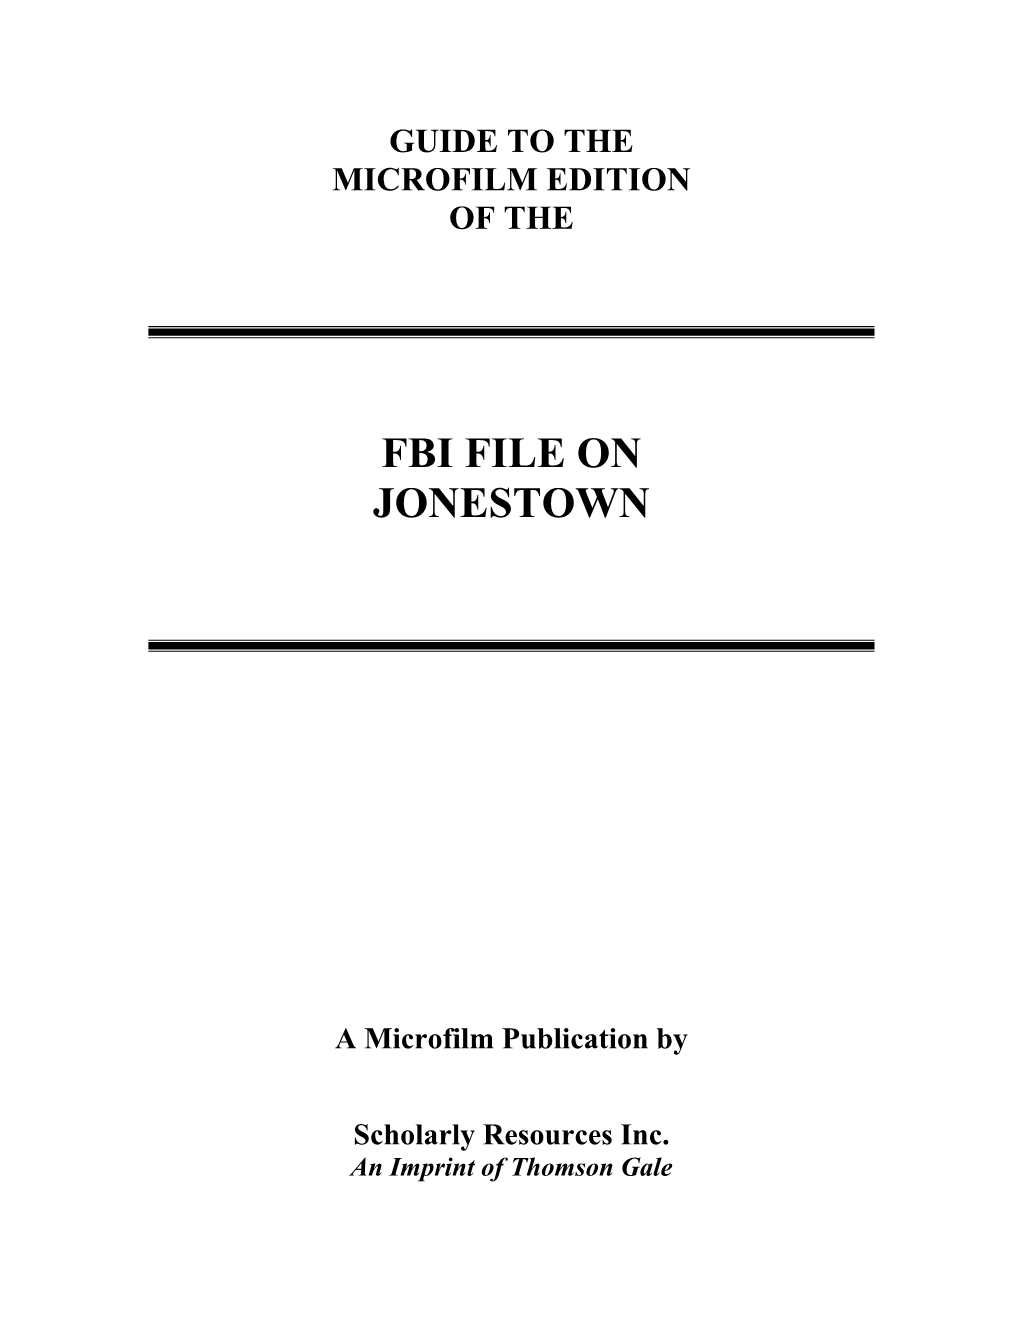 Fbi File on Jonestown